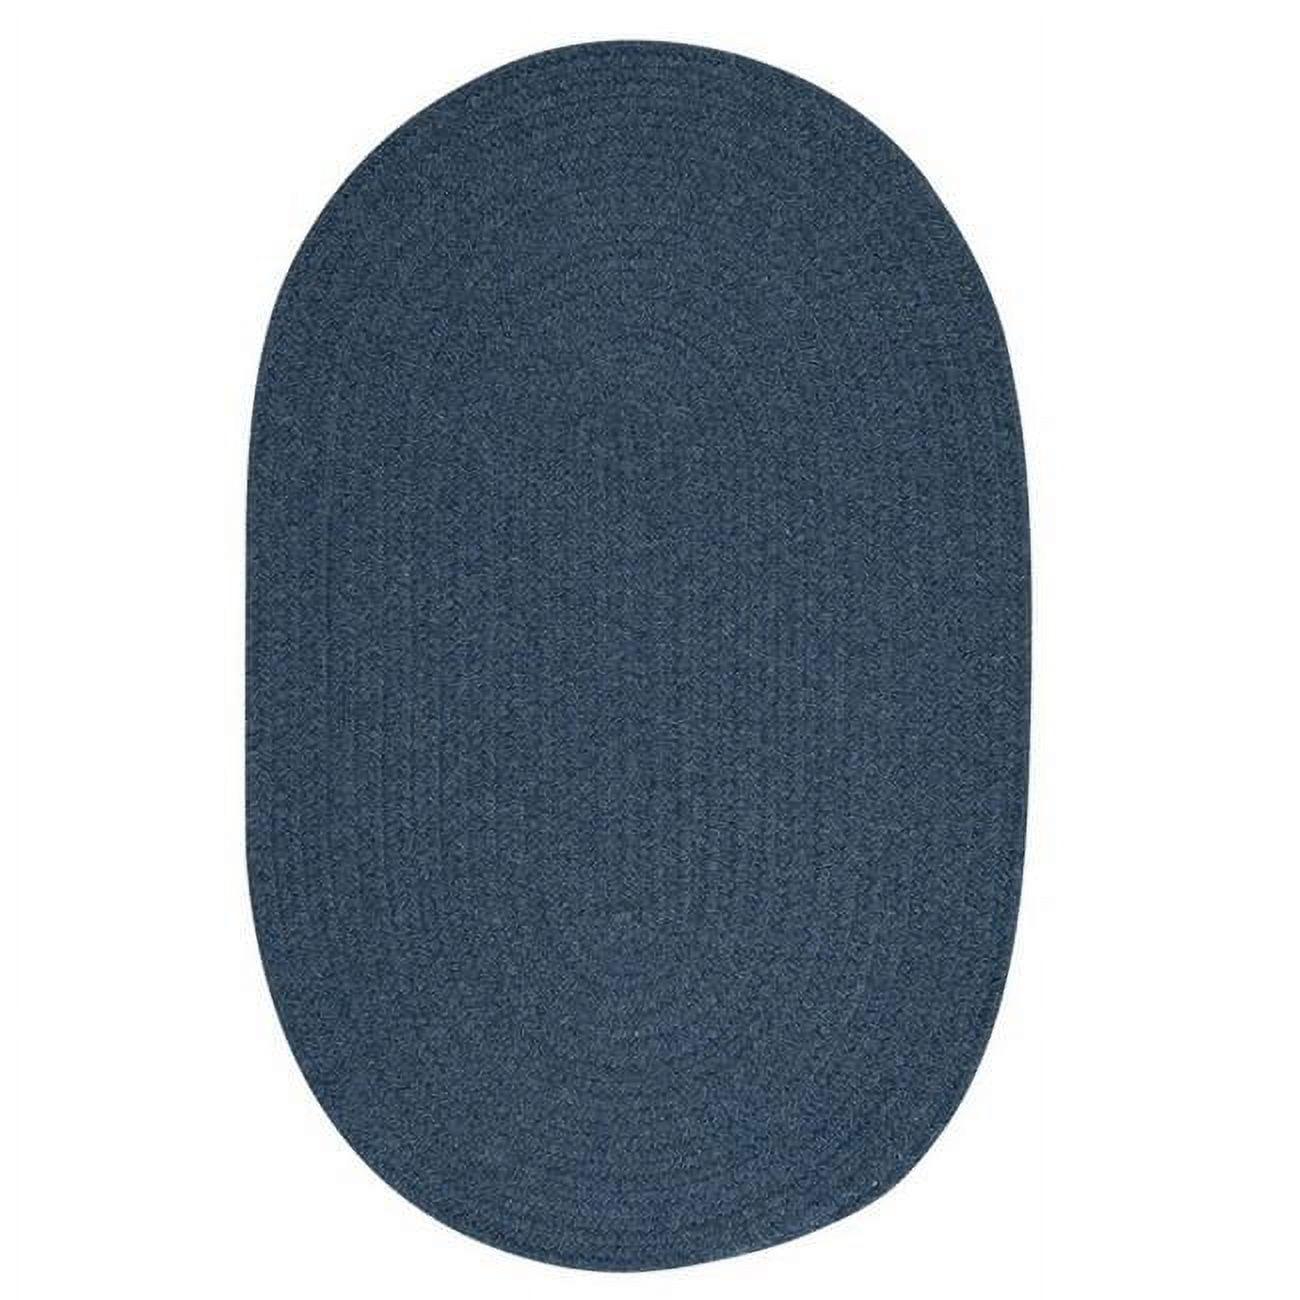 Federal Blue Oval 3' x 5' Braided Wool Blend Rug